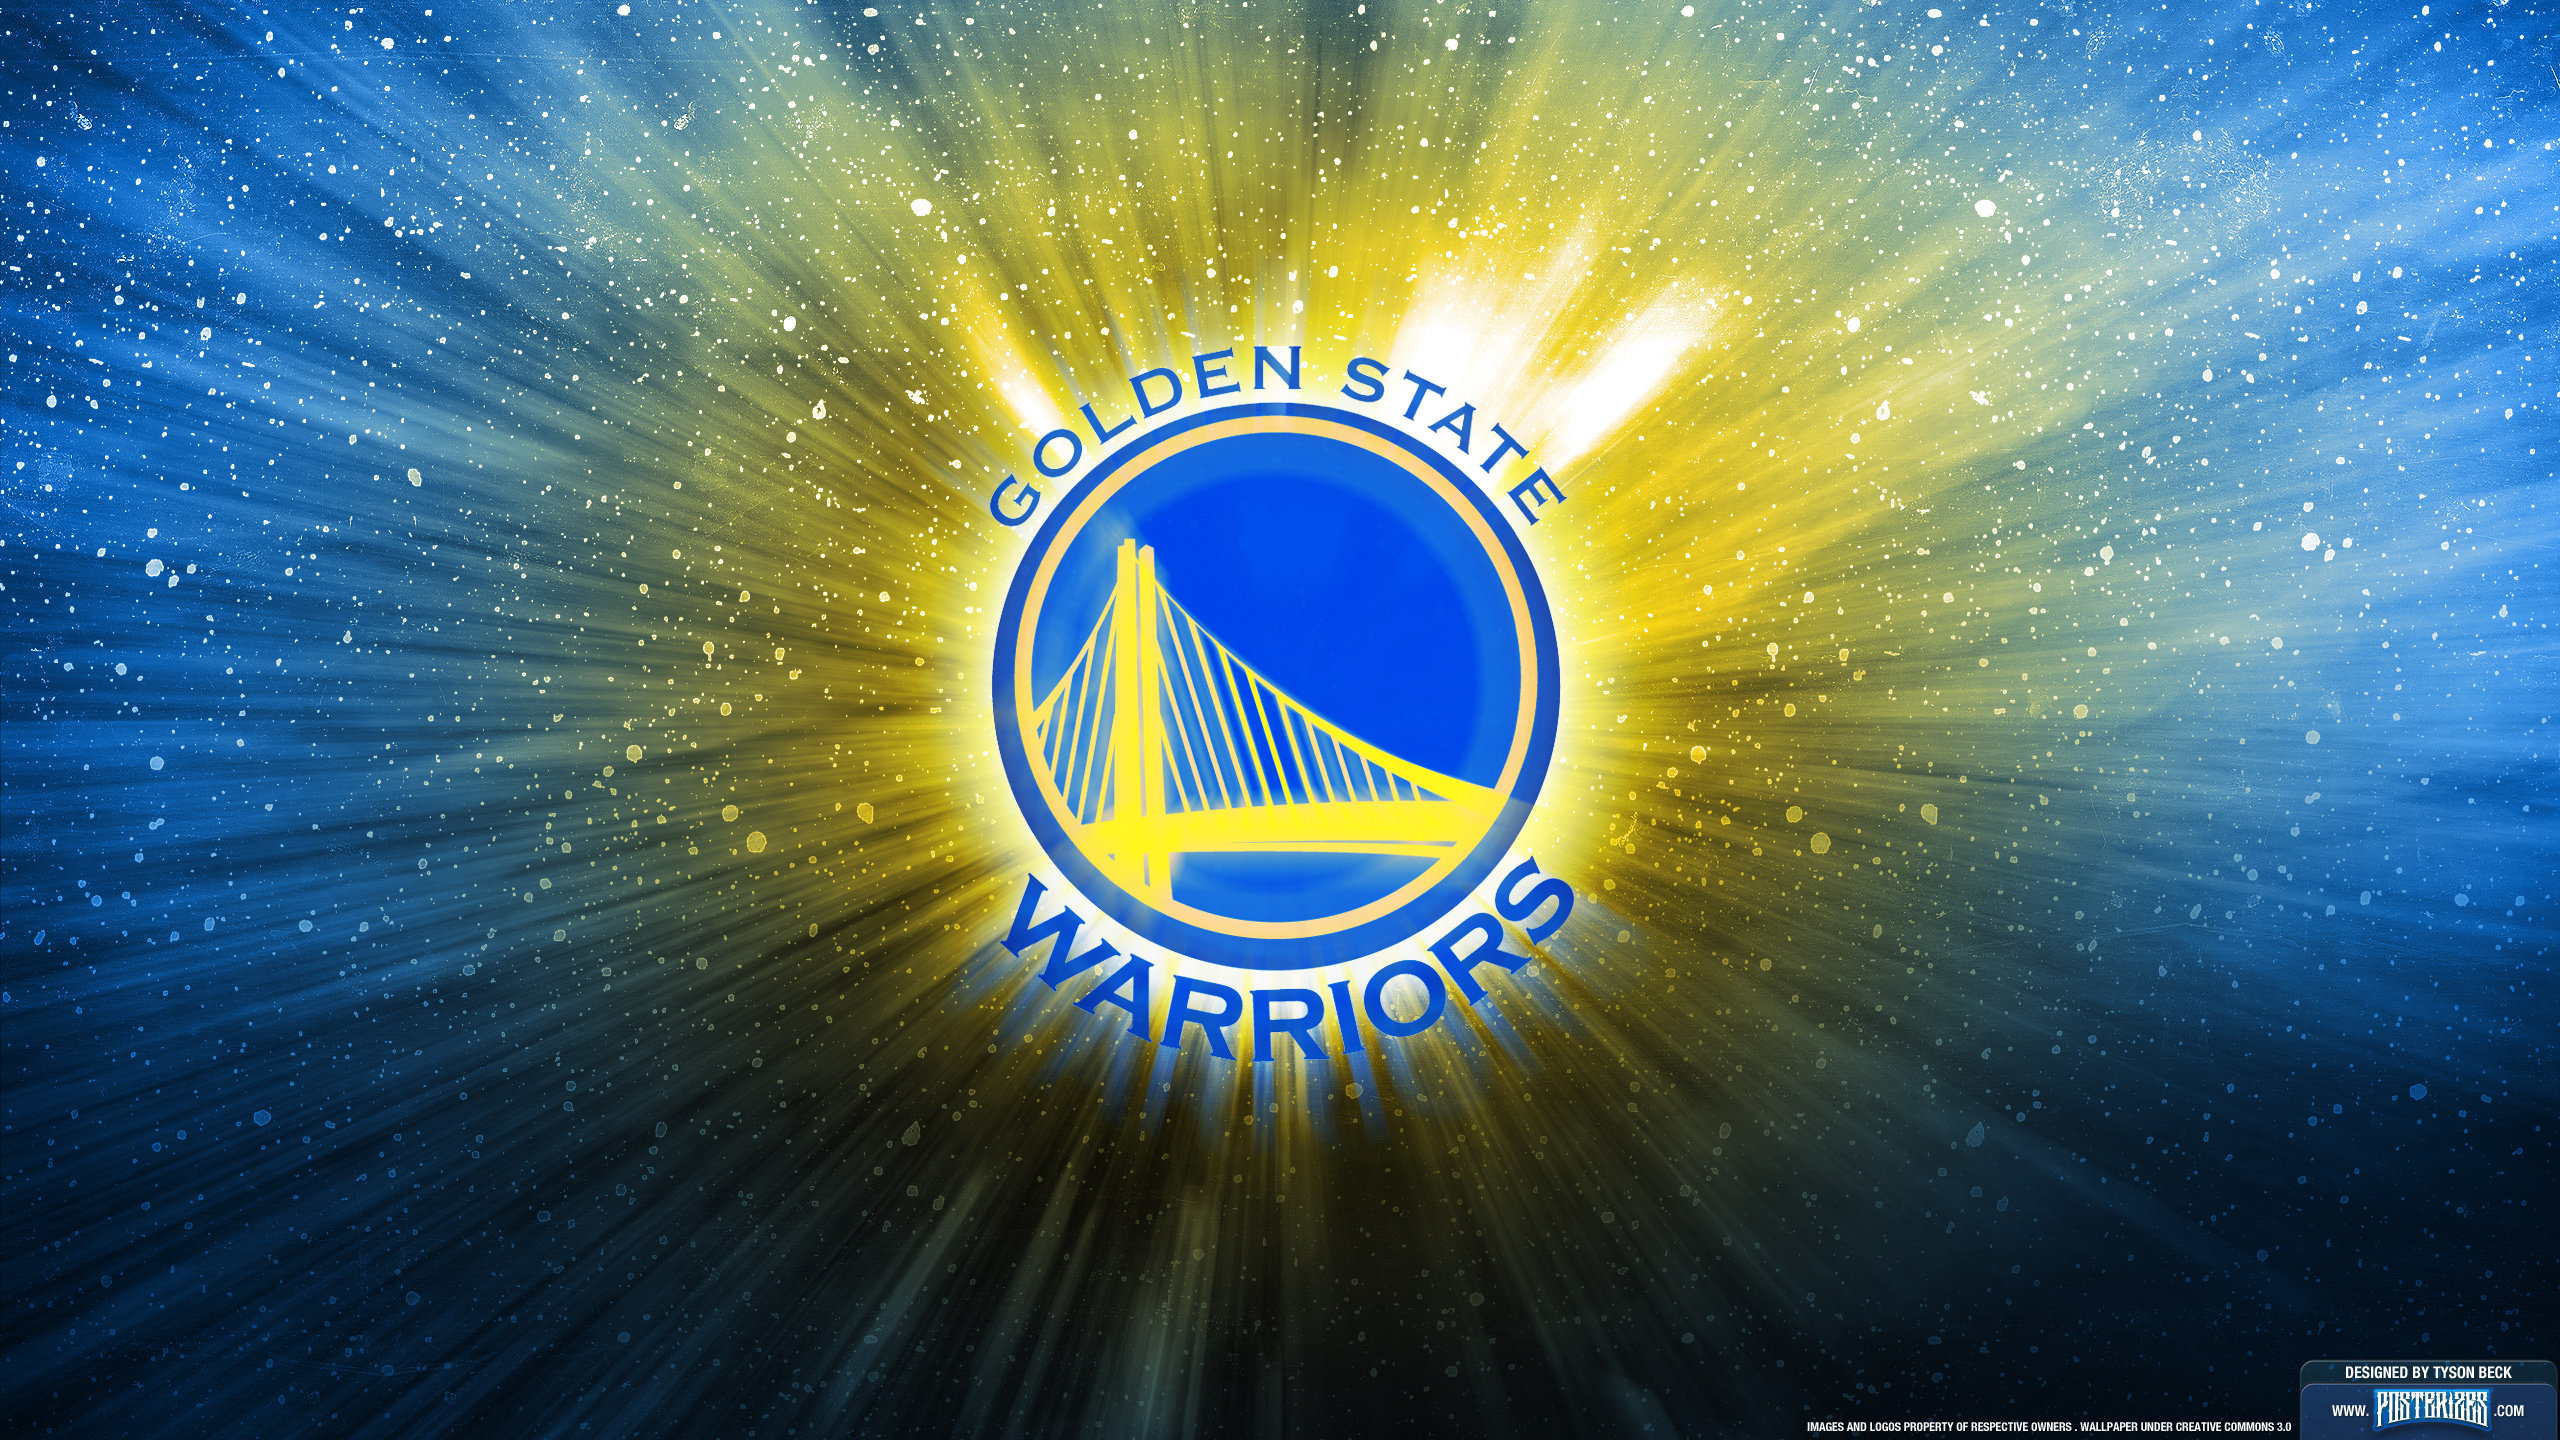 Golden State Warriors Logo Wallpaper Jpg